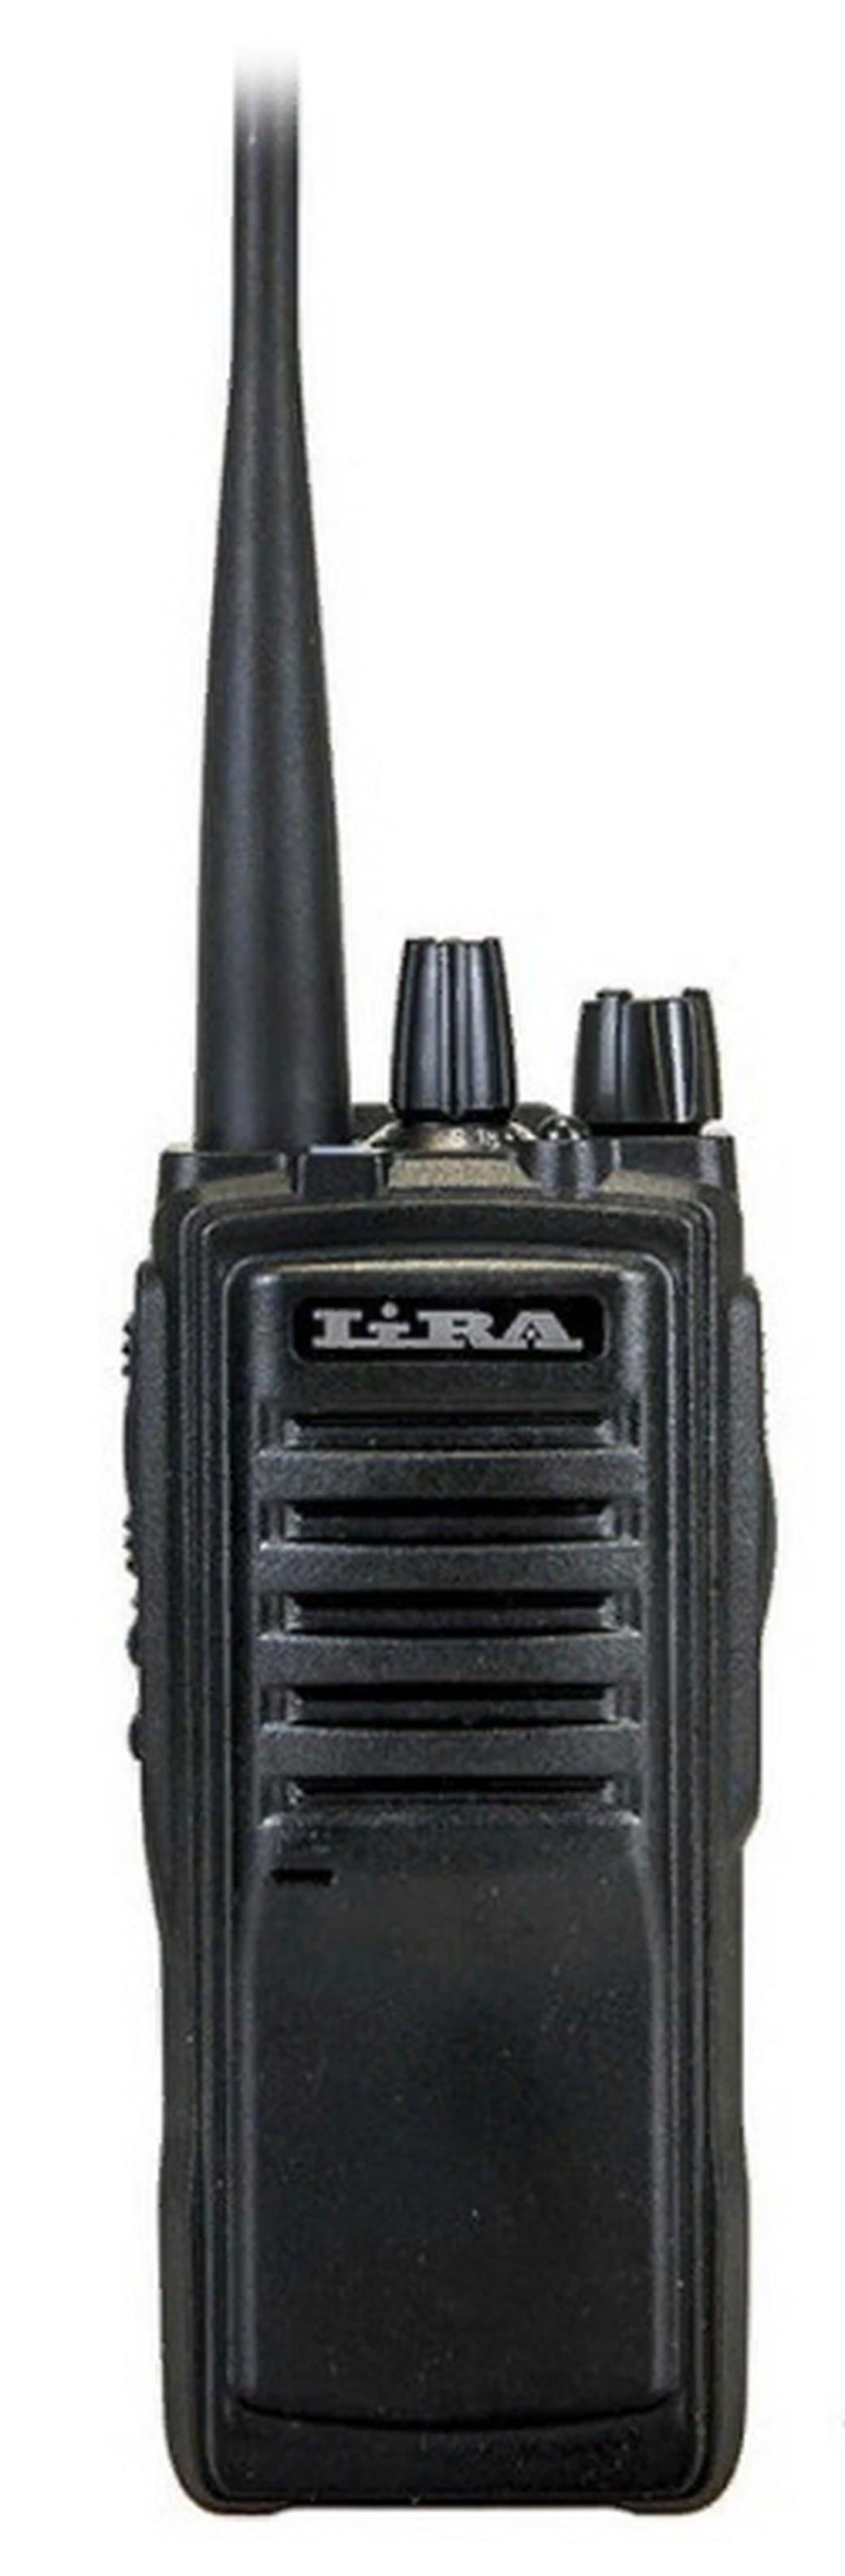 Радиостанция Lira CP-515, 400-470 МГц, 16 каналов, без дисплея (CP-515) фото